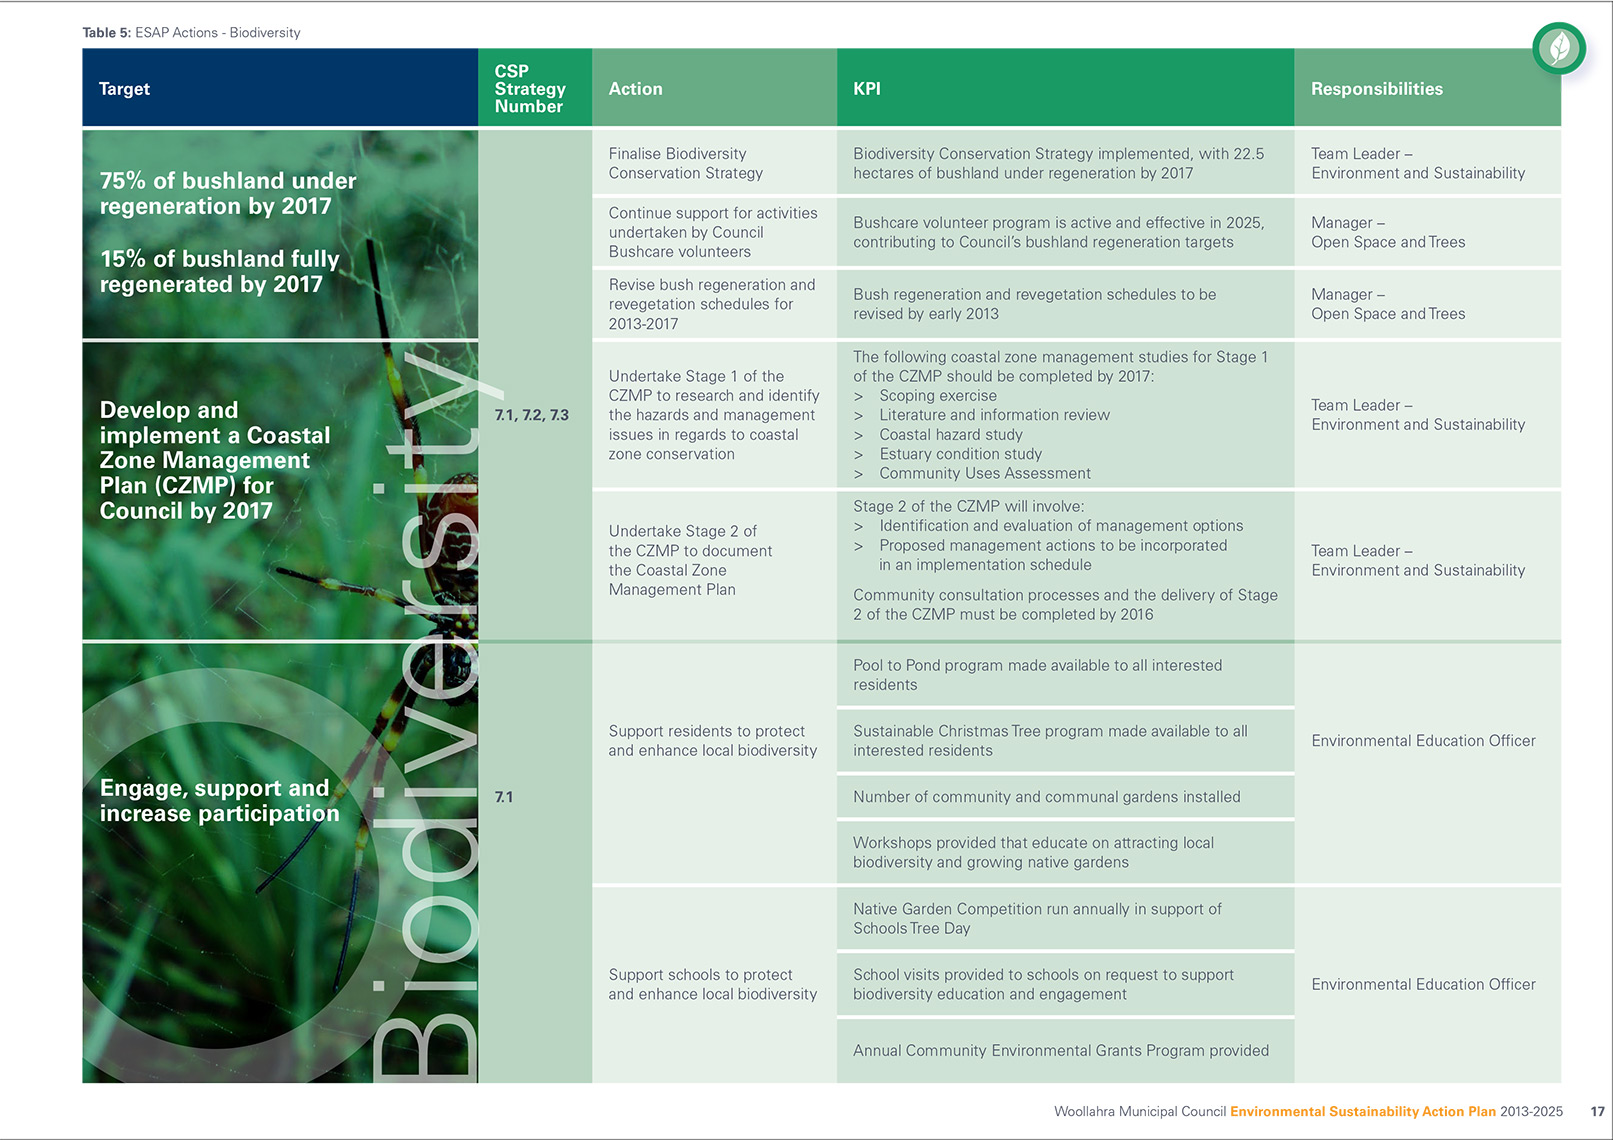 p17 Woollahra_ESAP (cover) Sustainable environmental communication design